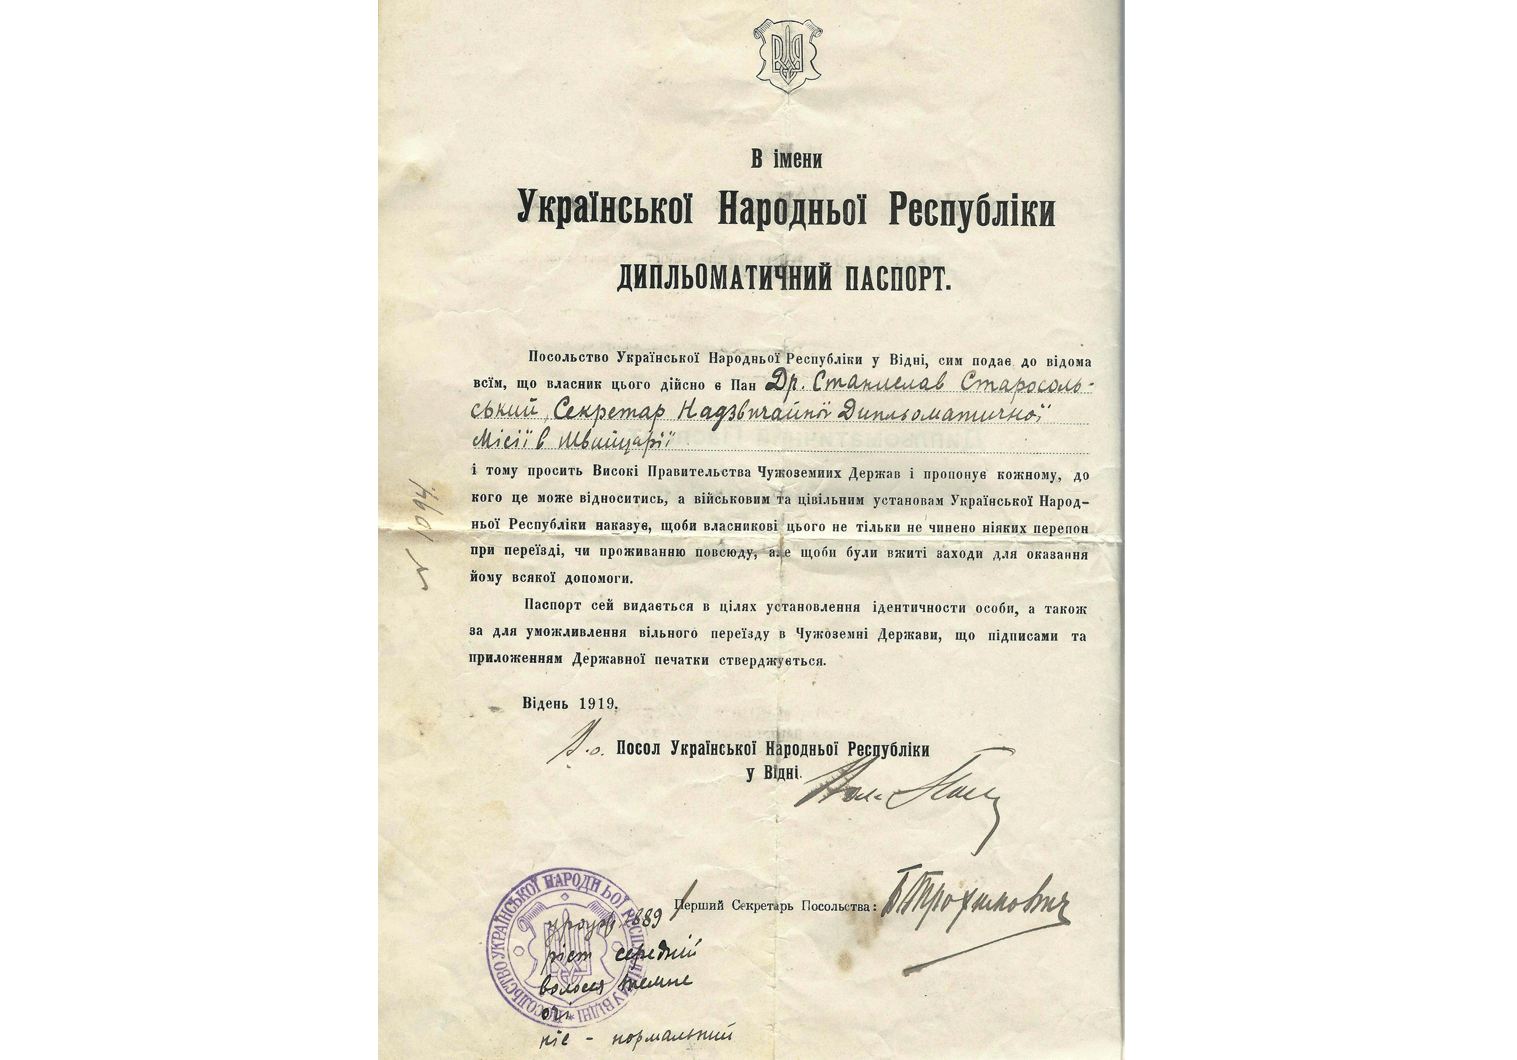 Ukrainian diplomatic passport 1919